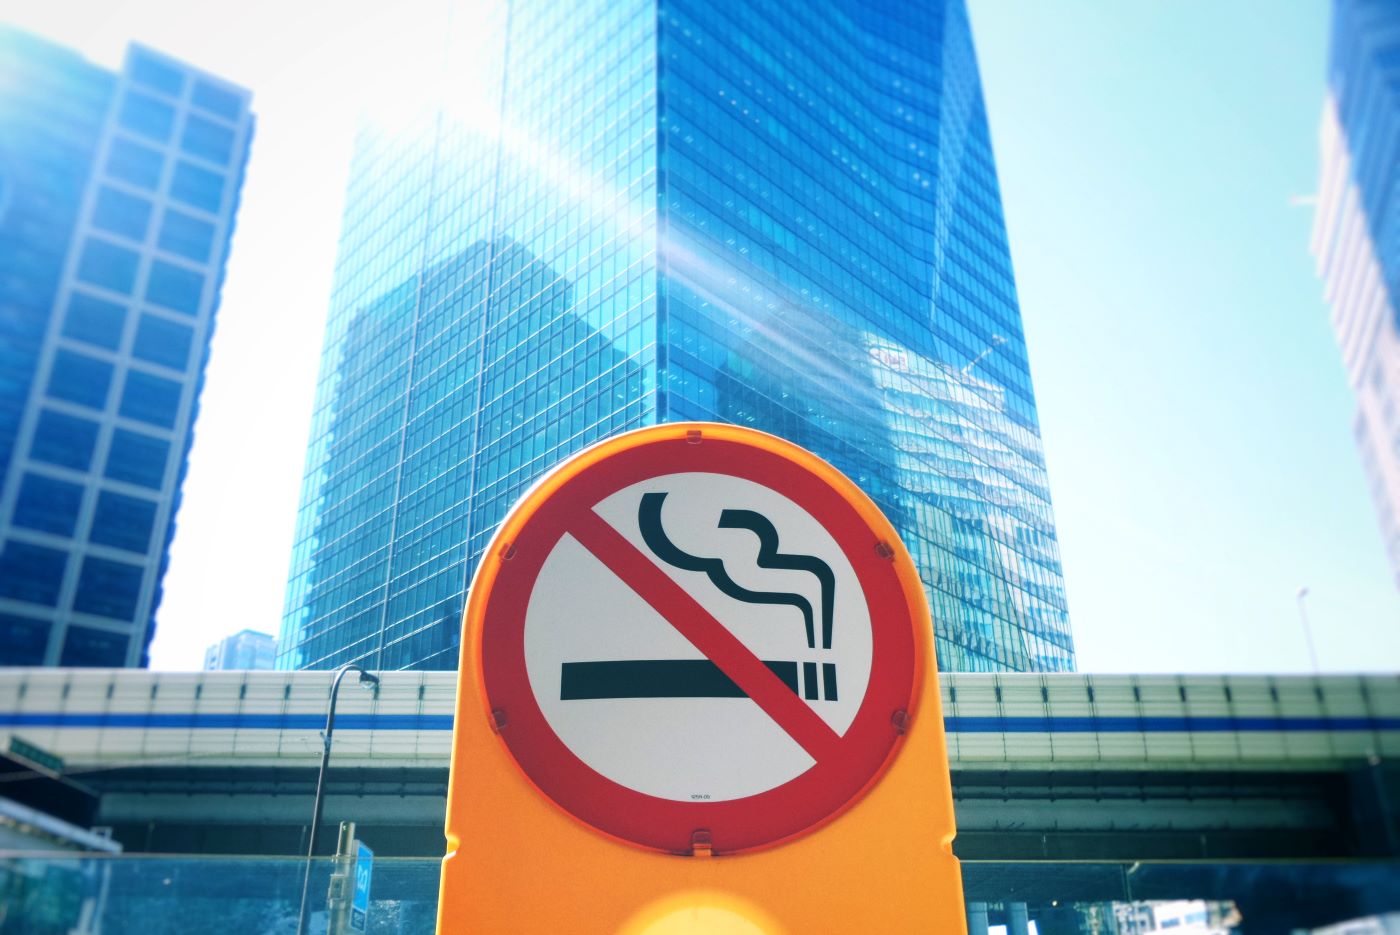 No smoking sign by Frank V. on Unsplash